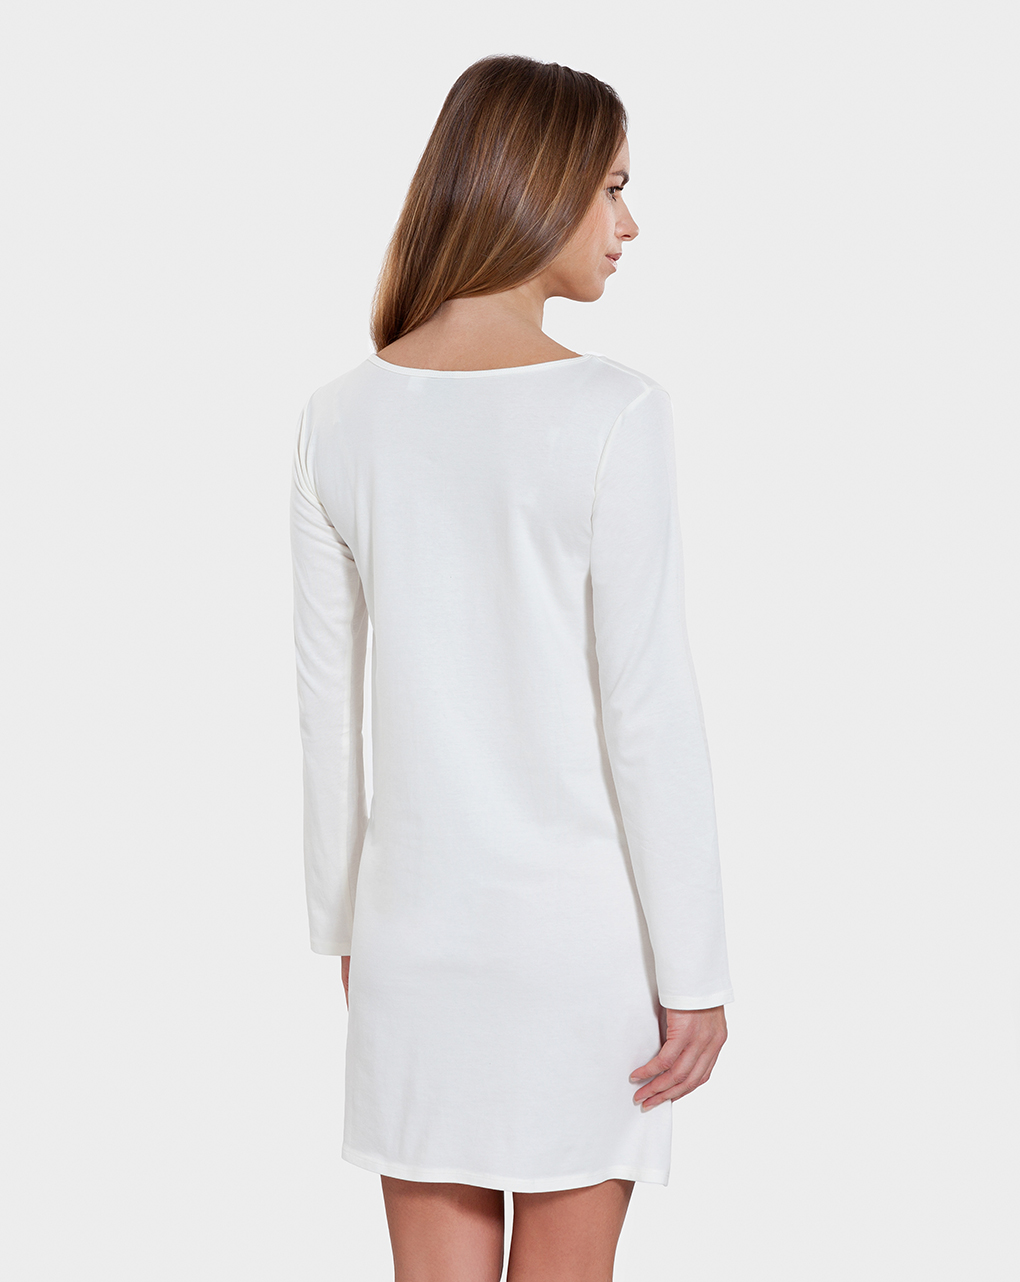 Camisa branca aberta com mangas compridas - Prénatal